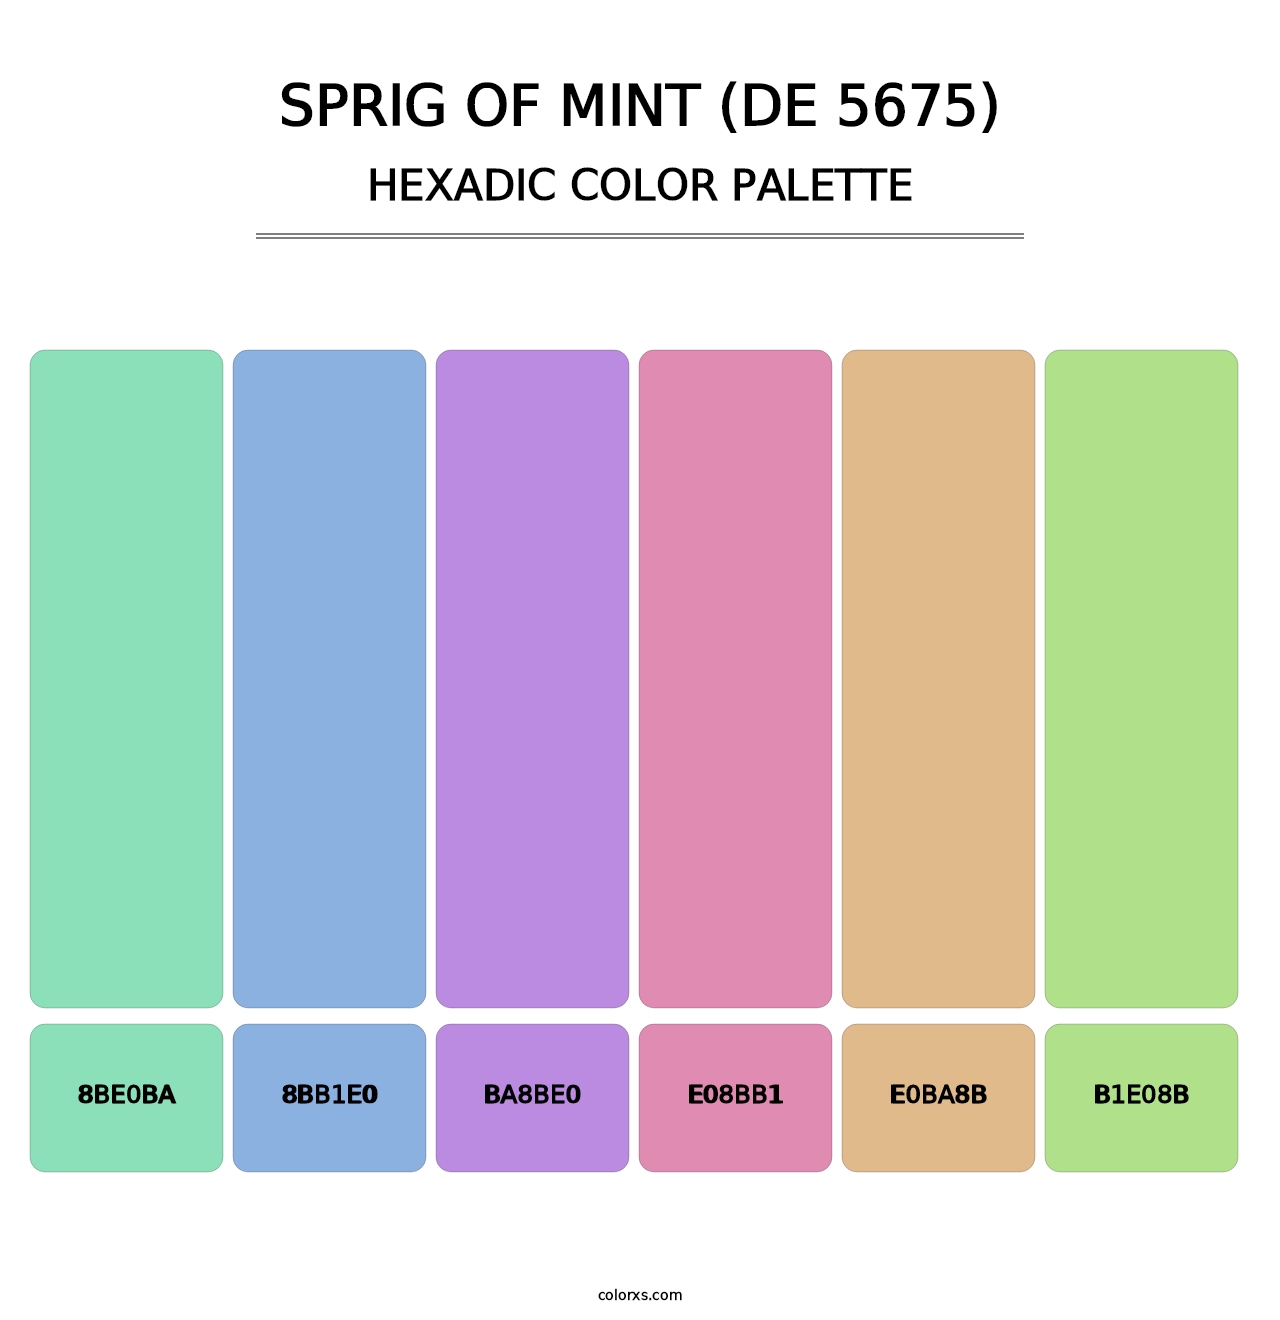 Sprig of Mint (DE 5675) - Hexadic Color Palette